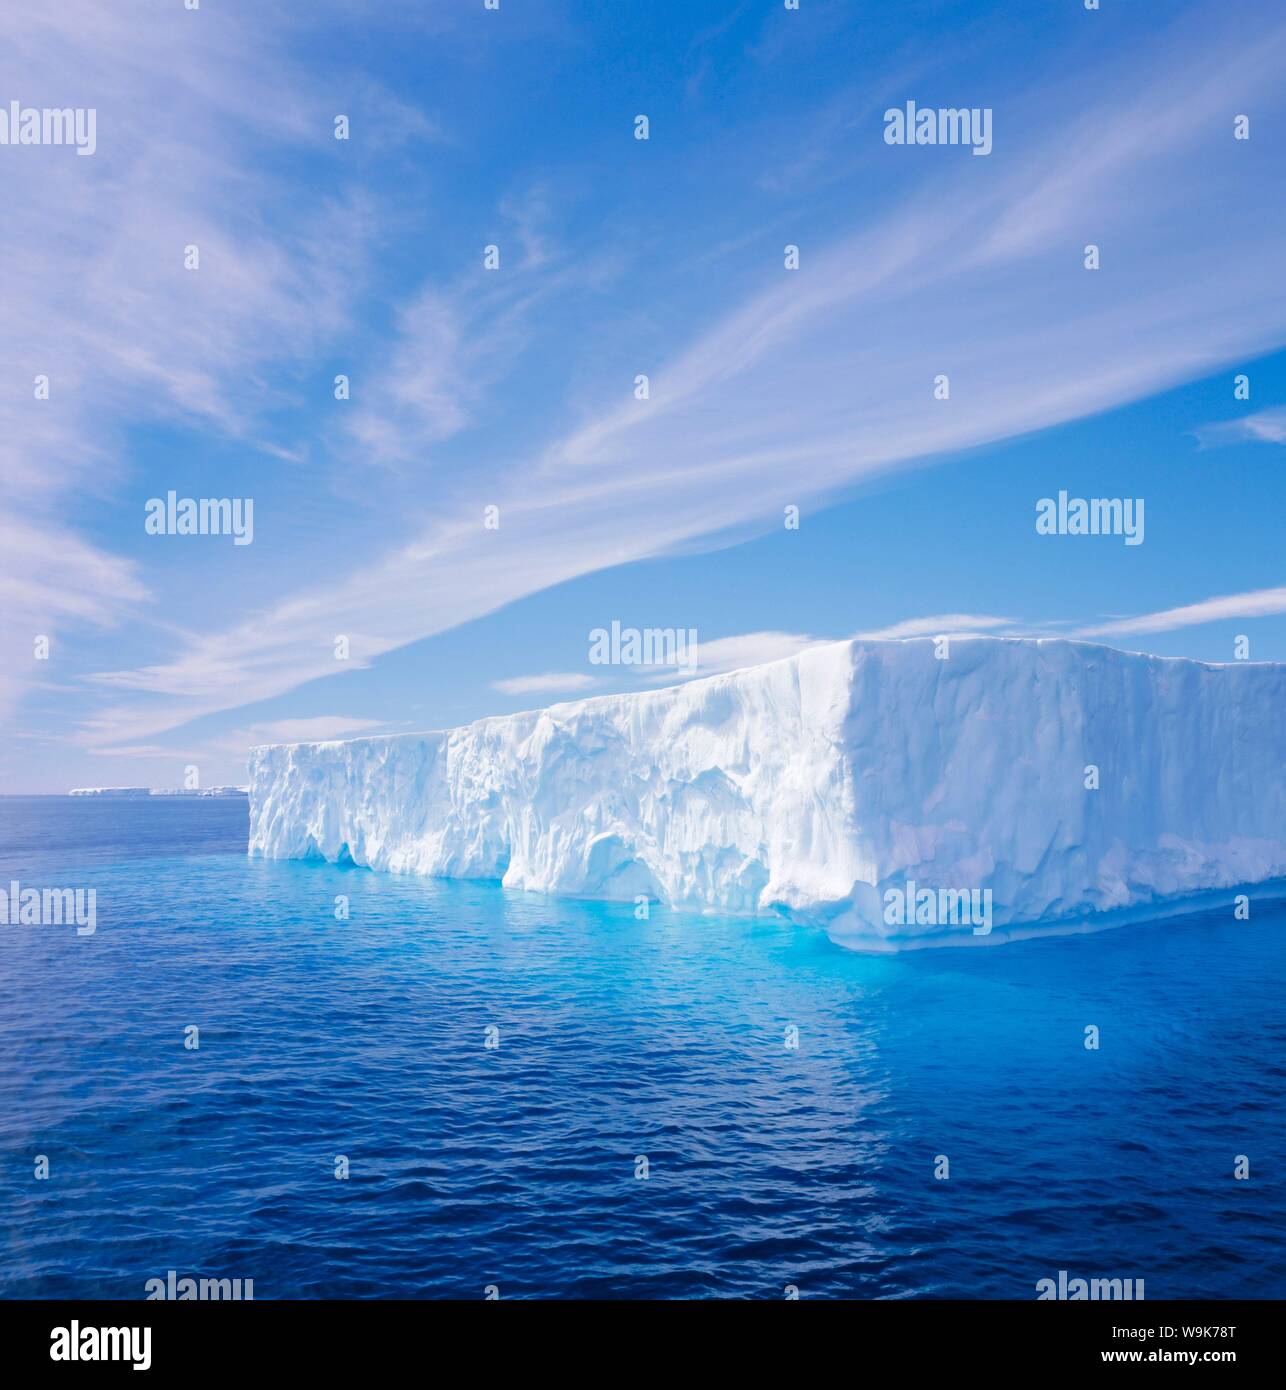 Tabular iceberg, Antarctic Ocean, Antarctica Stock Photo